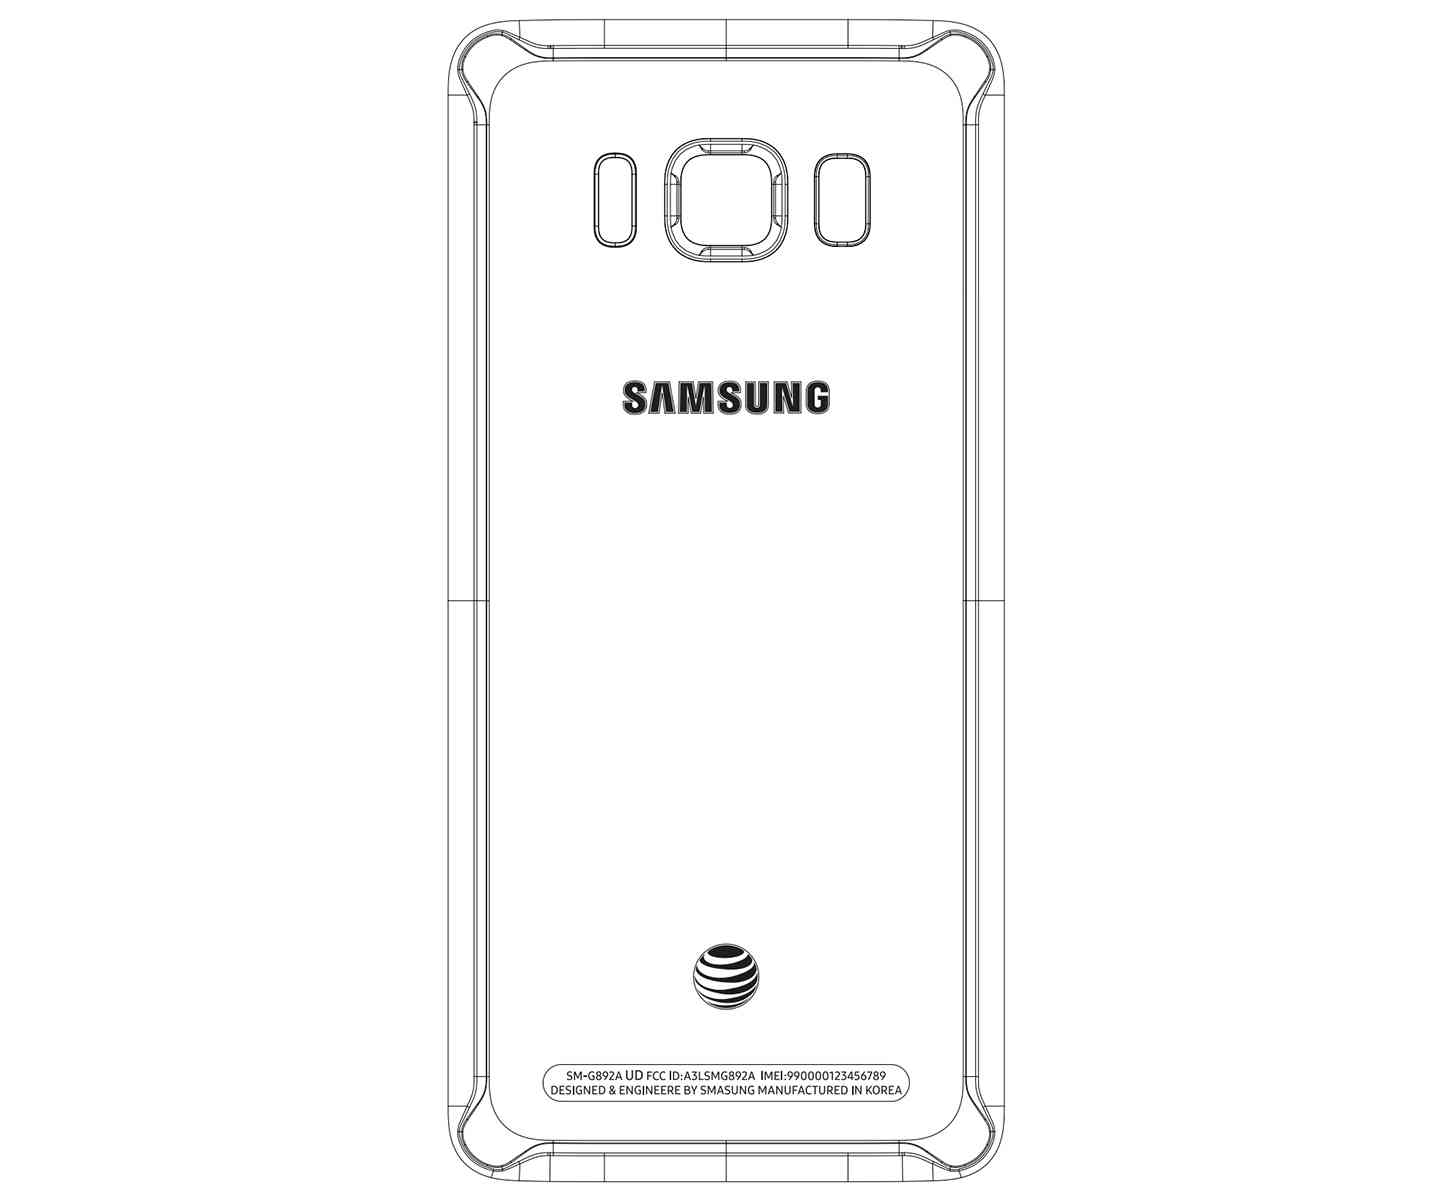 Samsung Galaxy S8 Active AT&T FCC leak